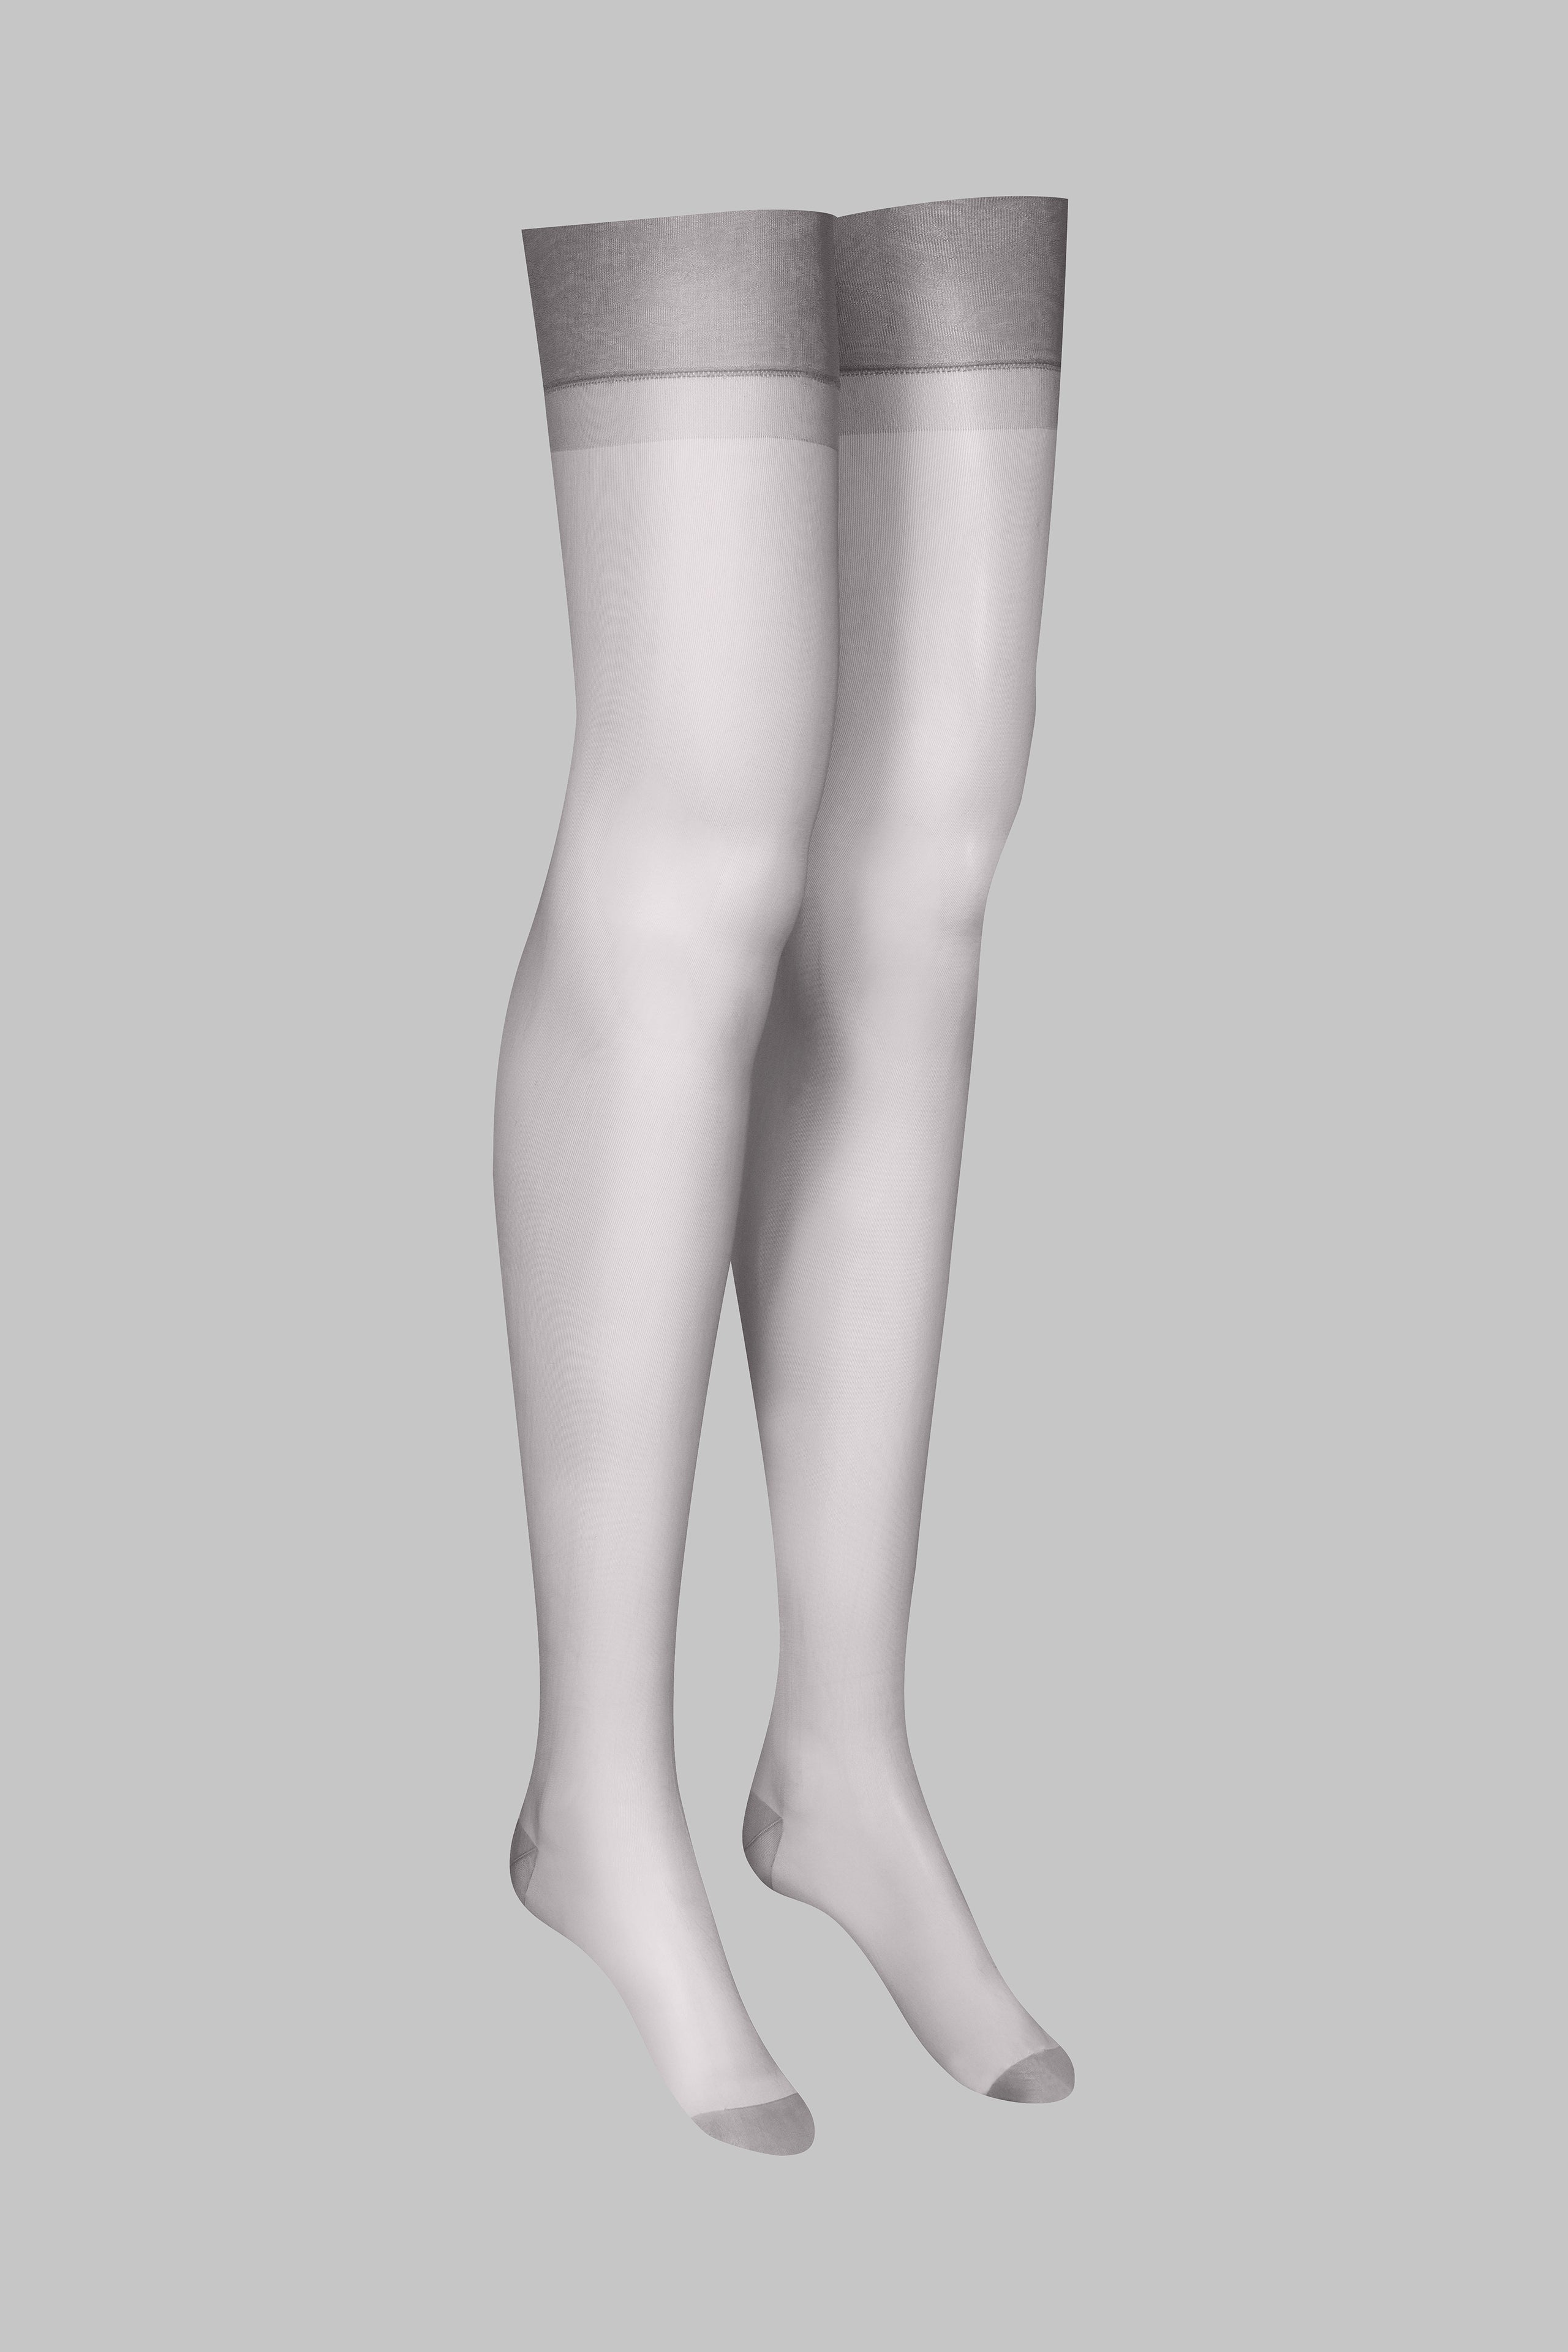 Nylon stockings - 15D - Grey